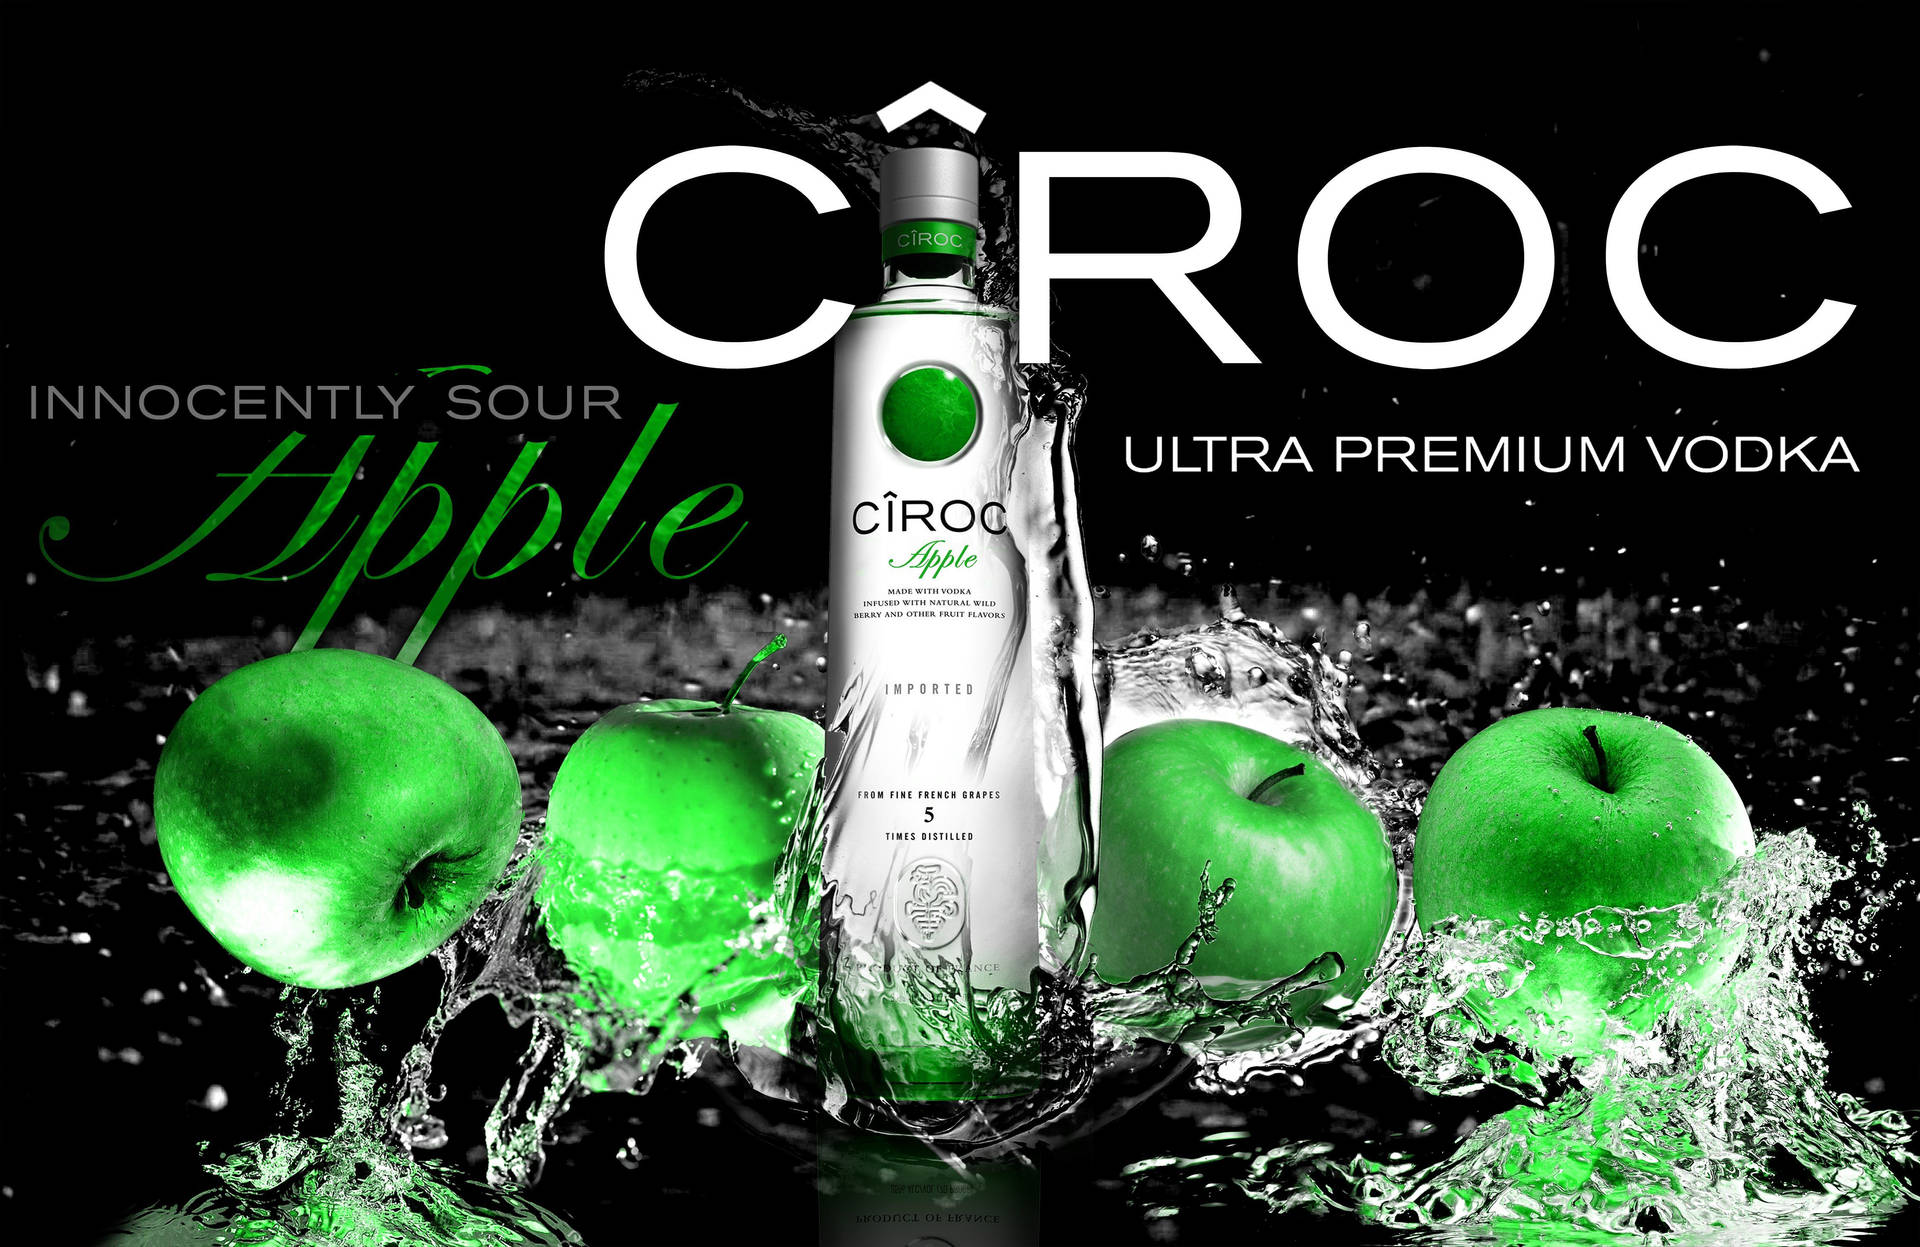 Cirocultra Premium French Vodka Apple Flavor: Ciroc Ultra Premium Fransk Vodka Med Äppelsmak. Wallpaper